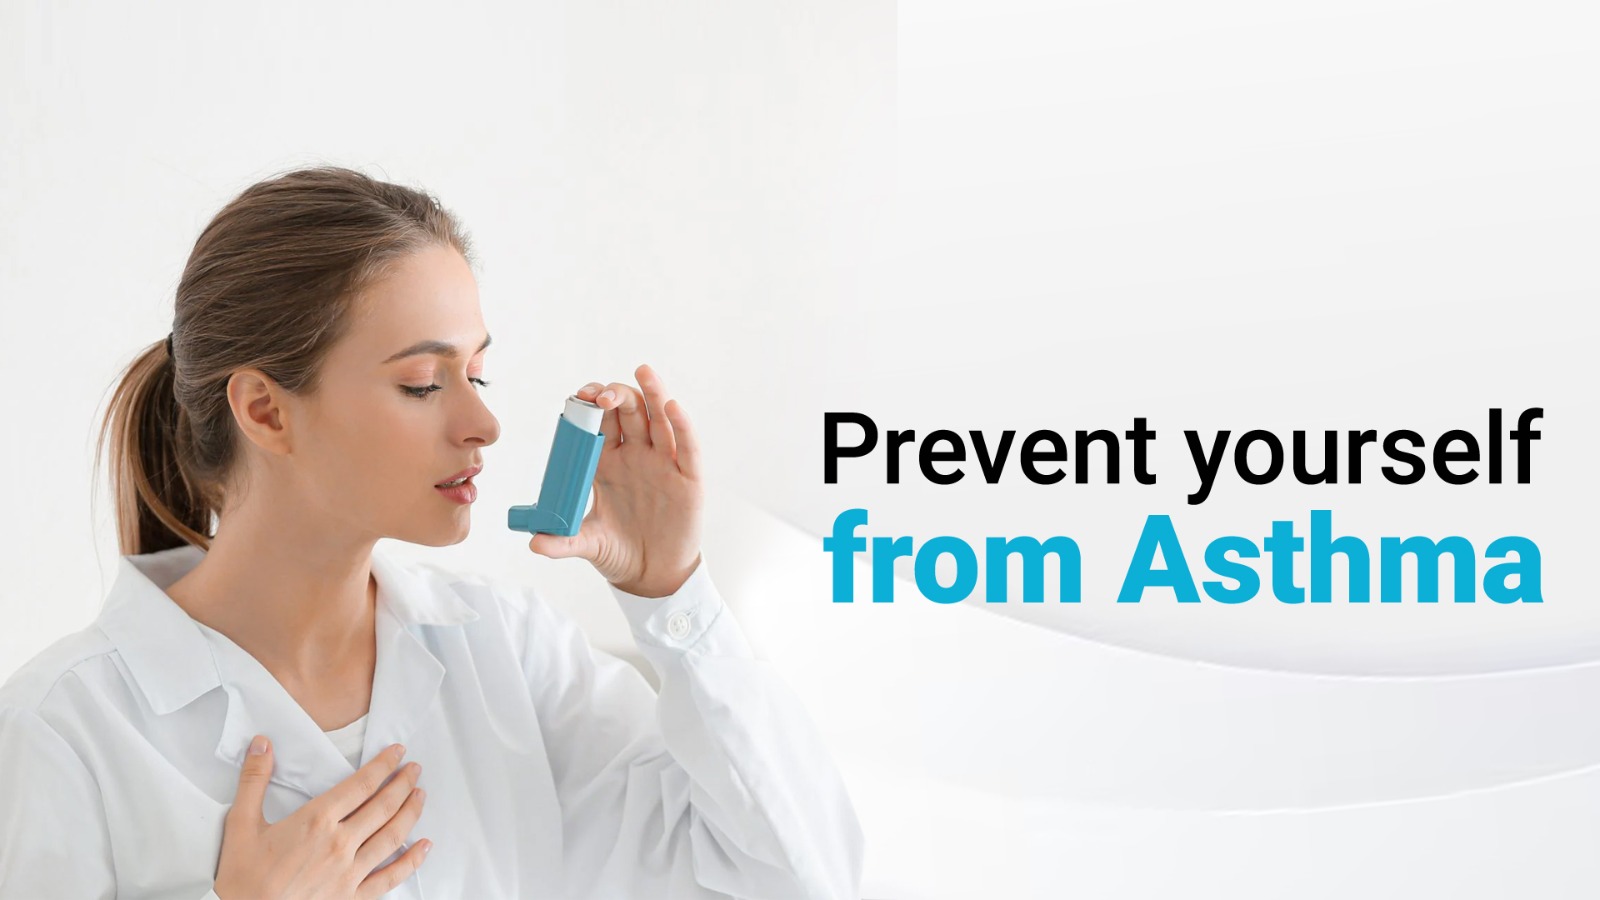 Precautions for Asthma